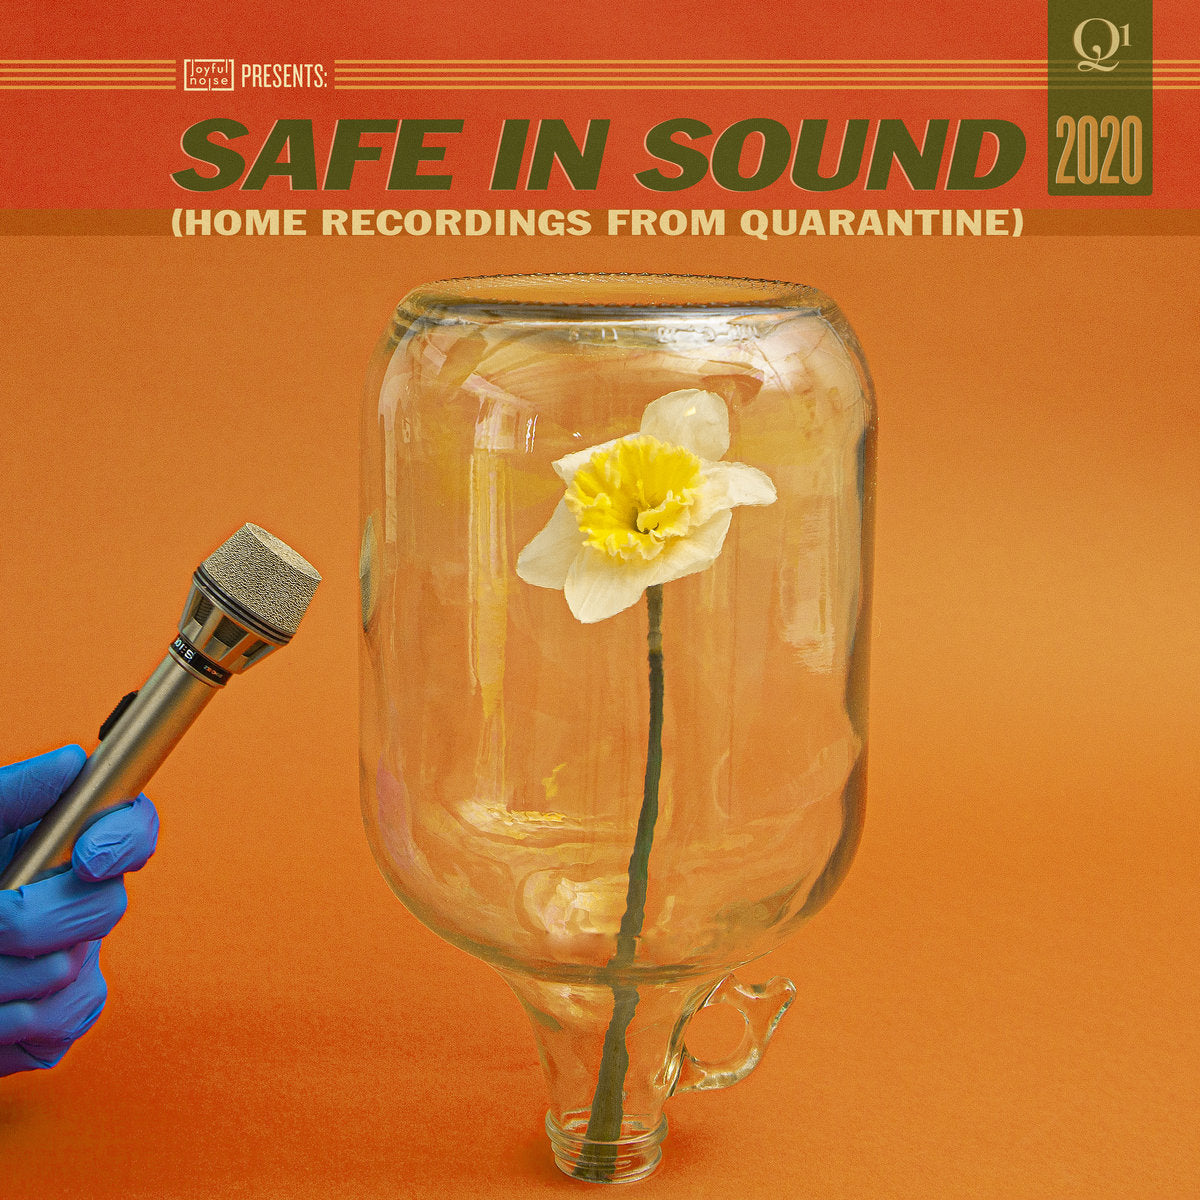 V/A - SAFE IN SOUND: HOME RECORDINGS FROM QUARANTINE Vinyl LP